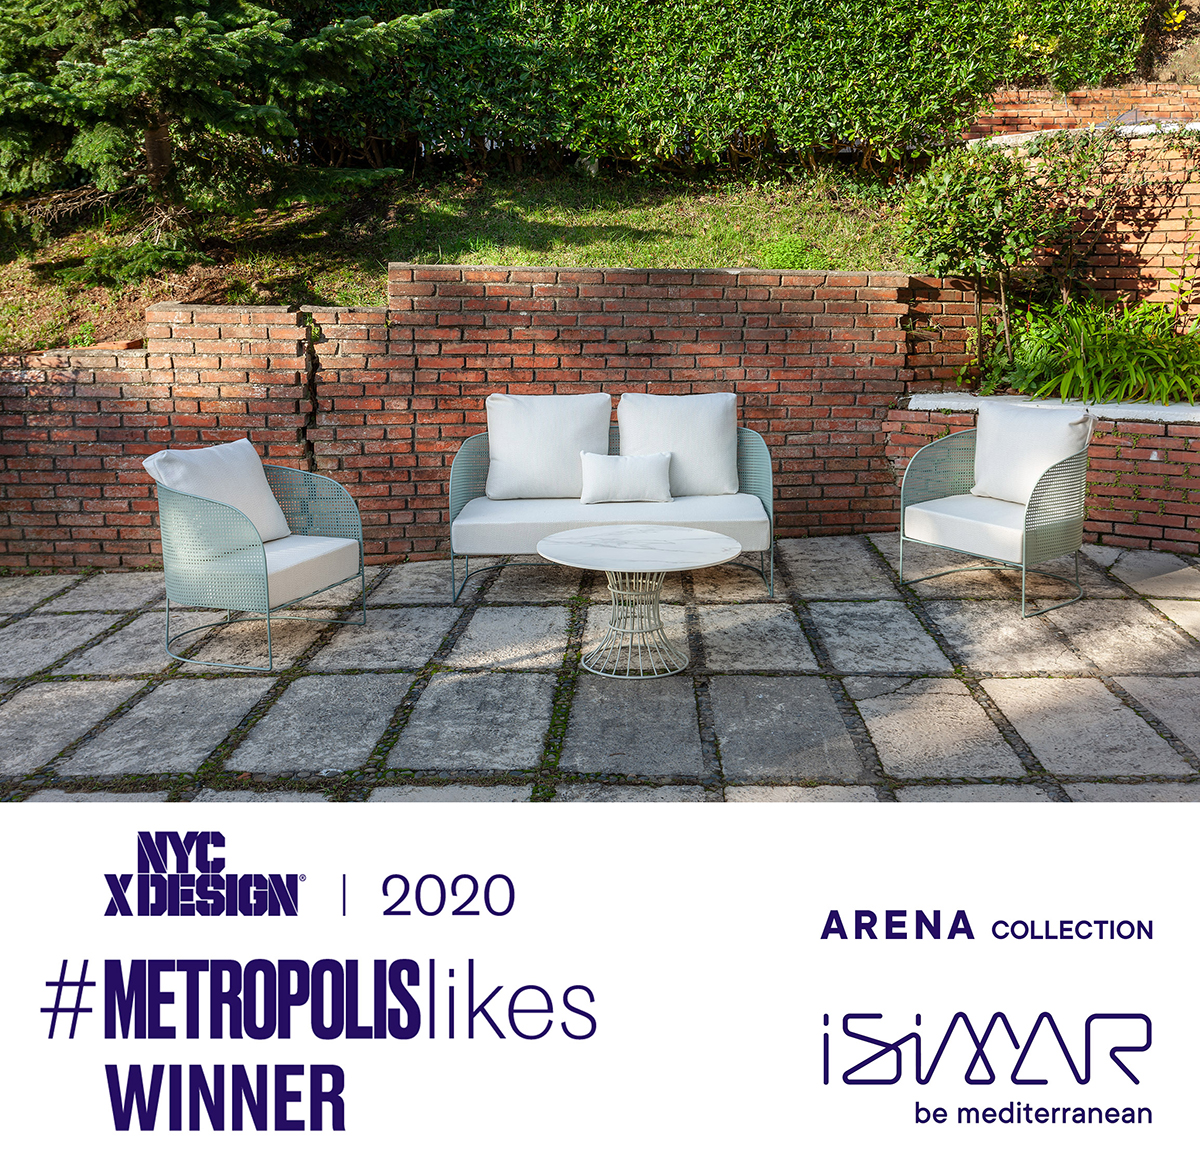 isimar-afrena-collection-metropolislikes-award-2020